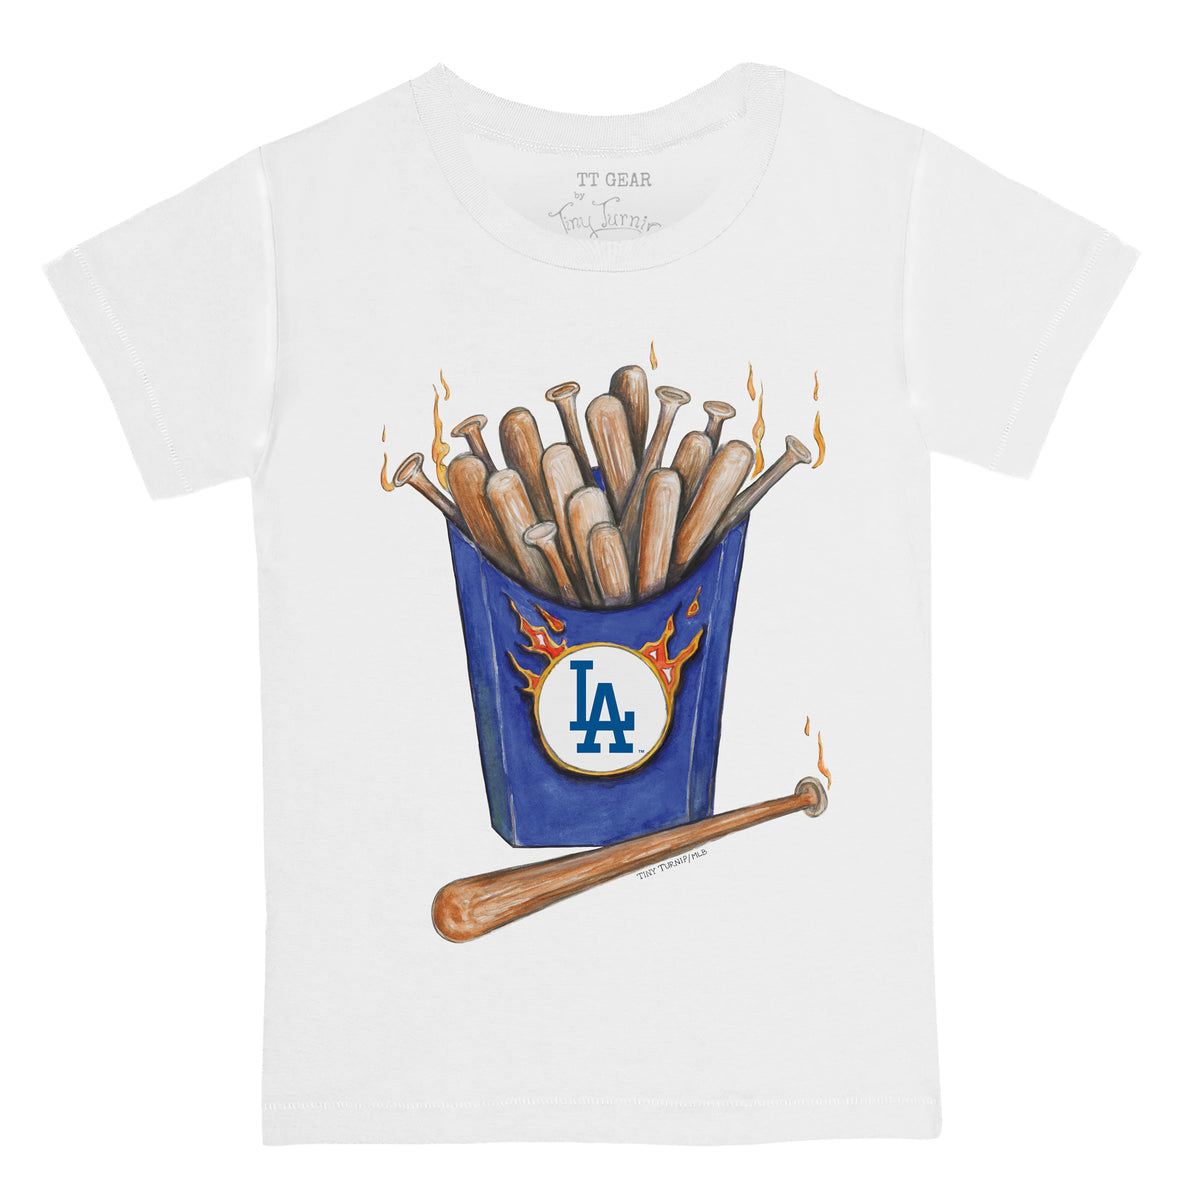 Los Angeles Dodgers Hot Bats Tee Shirt